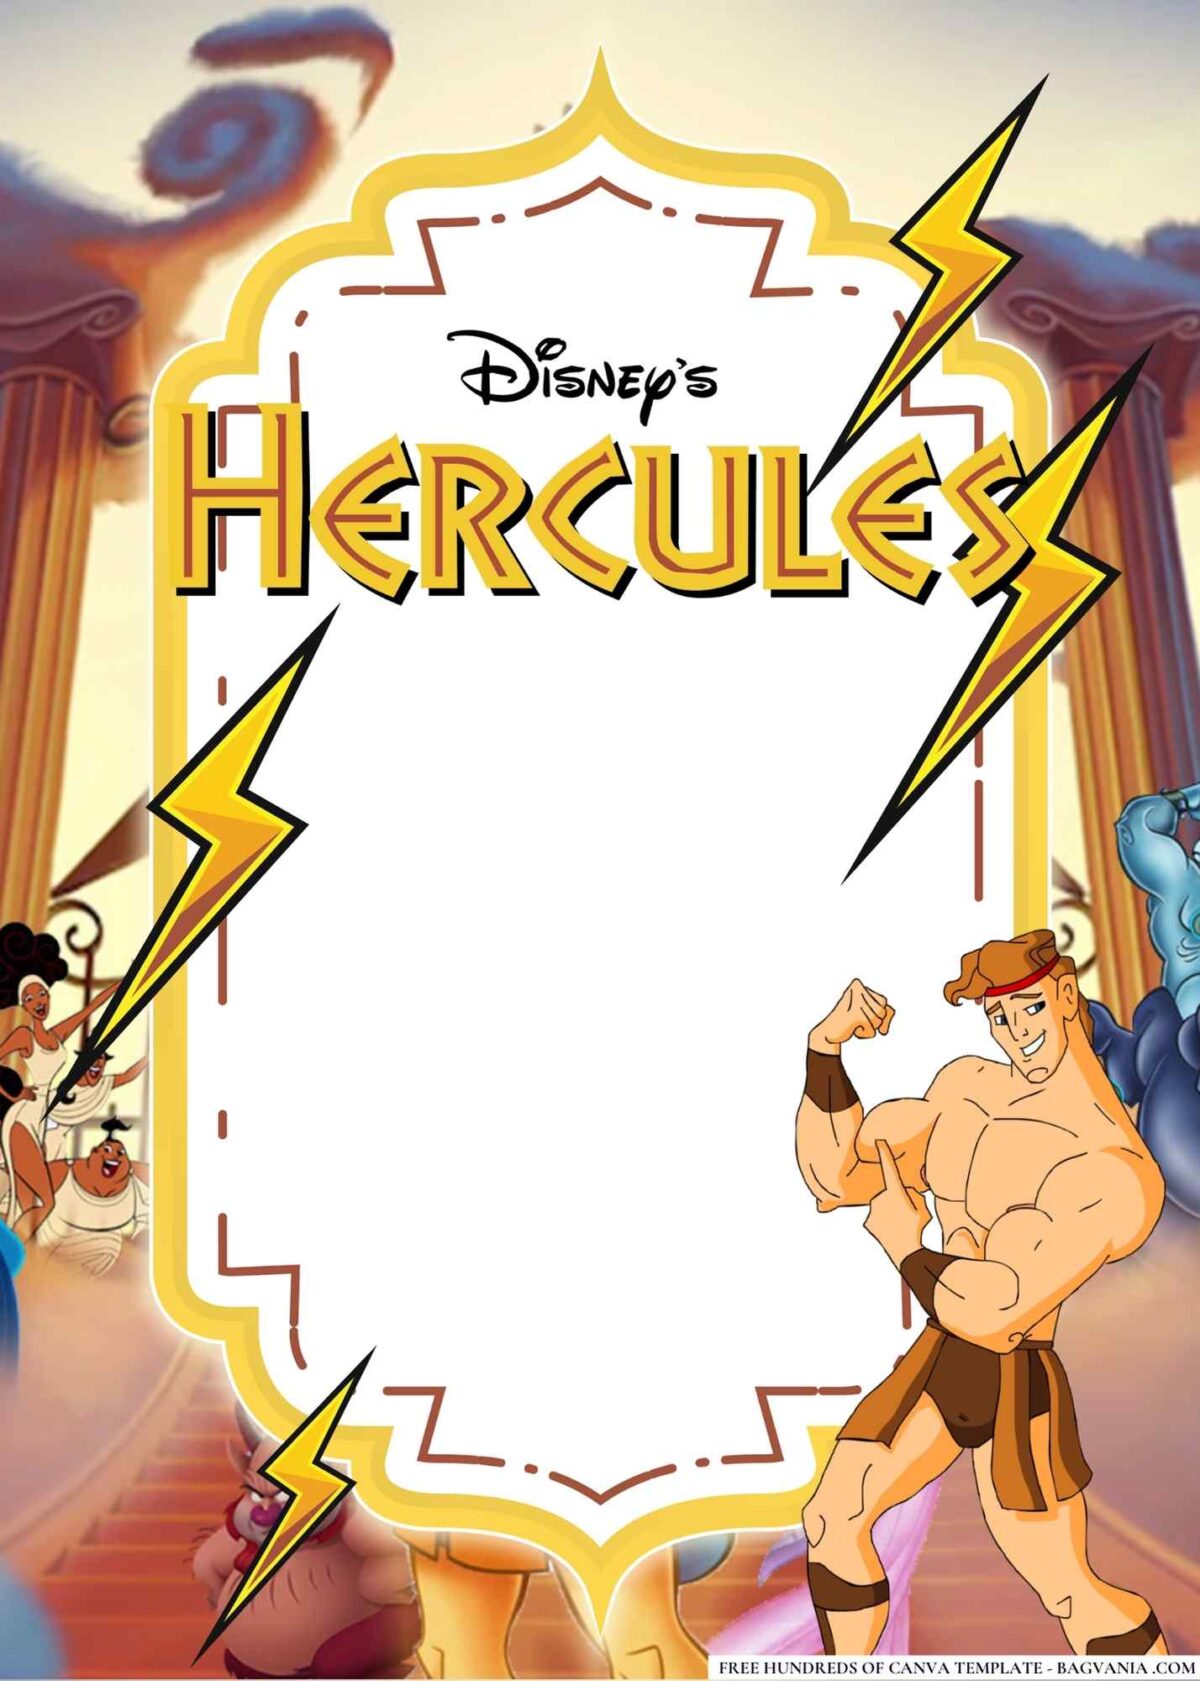 FREE Editable Hercules Birthday Invitations